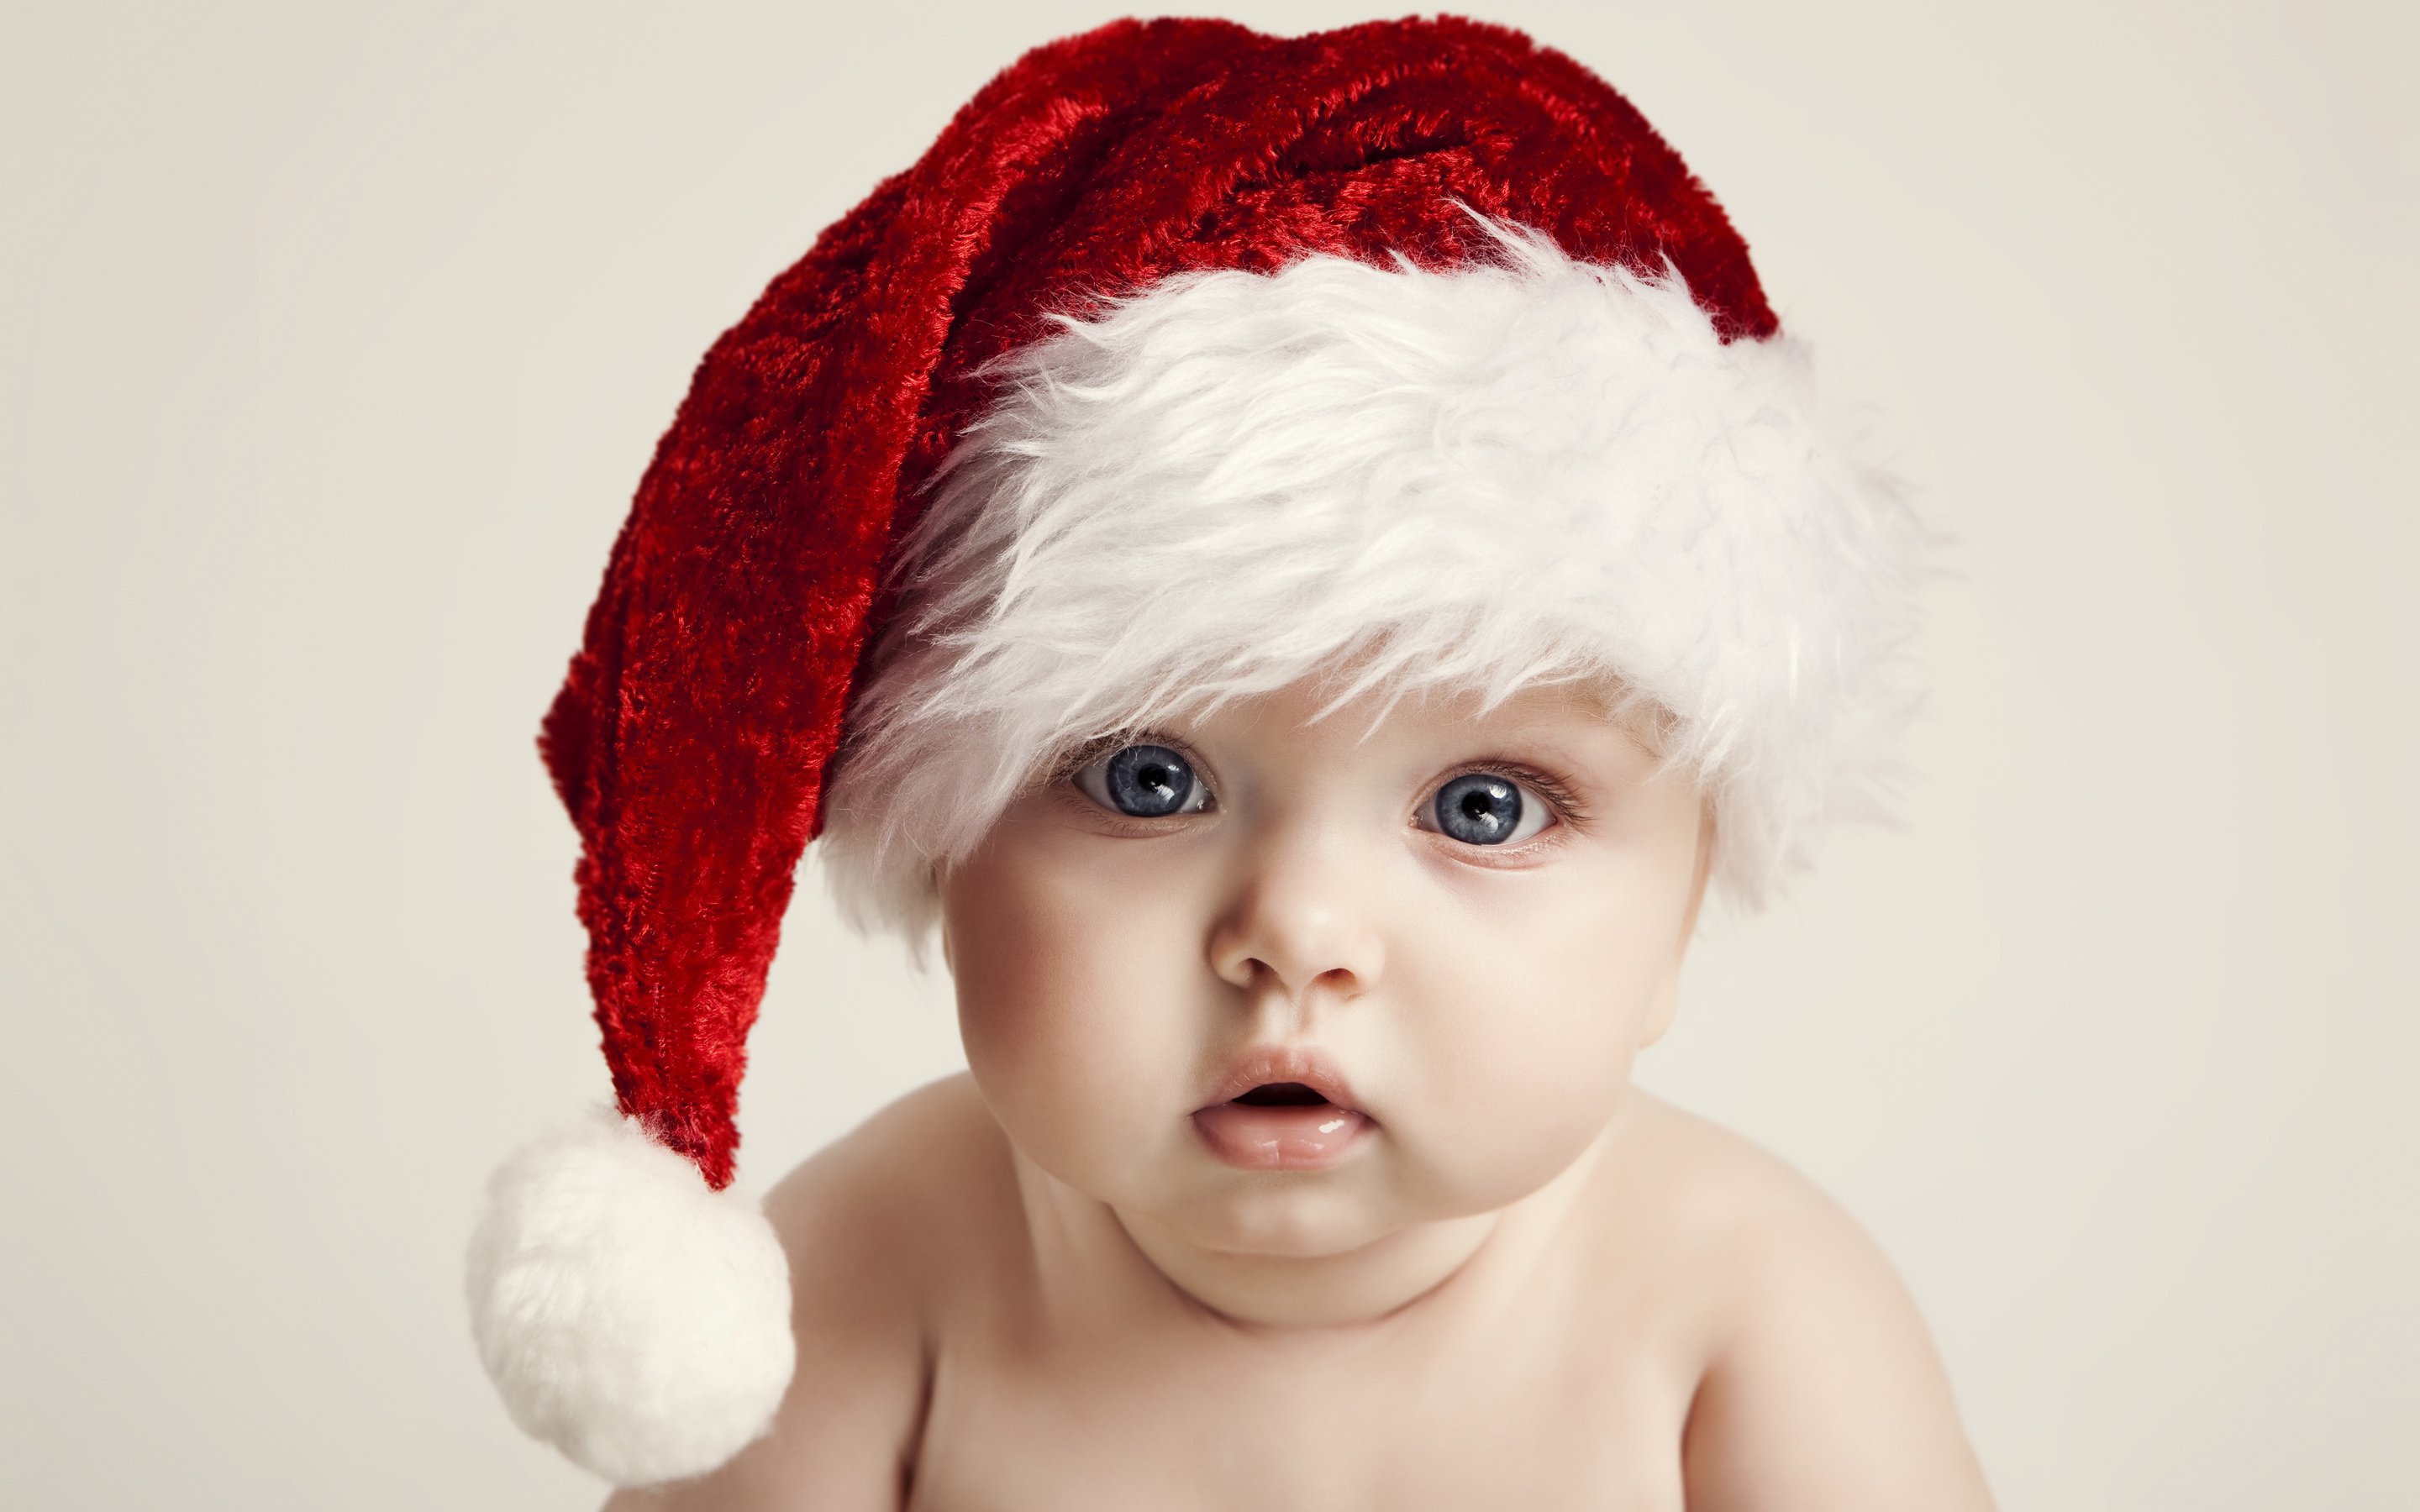 Santa Claus Baby Boy Wallpaper for Desktop 2880x1800